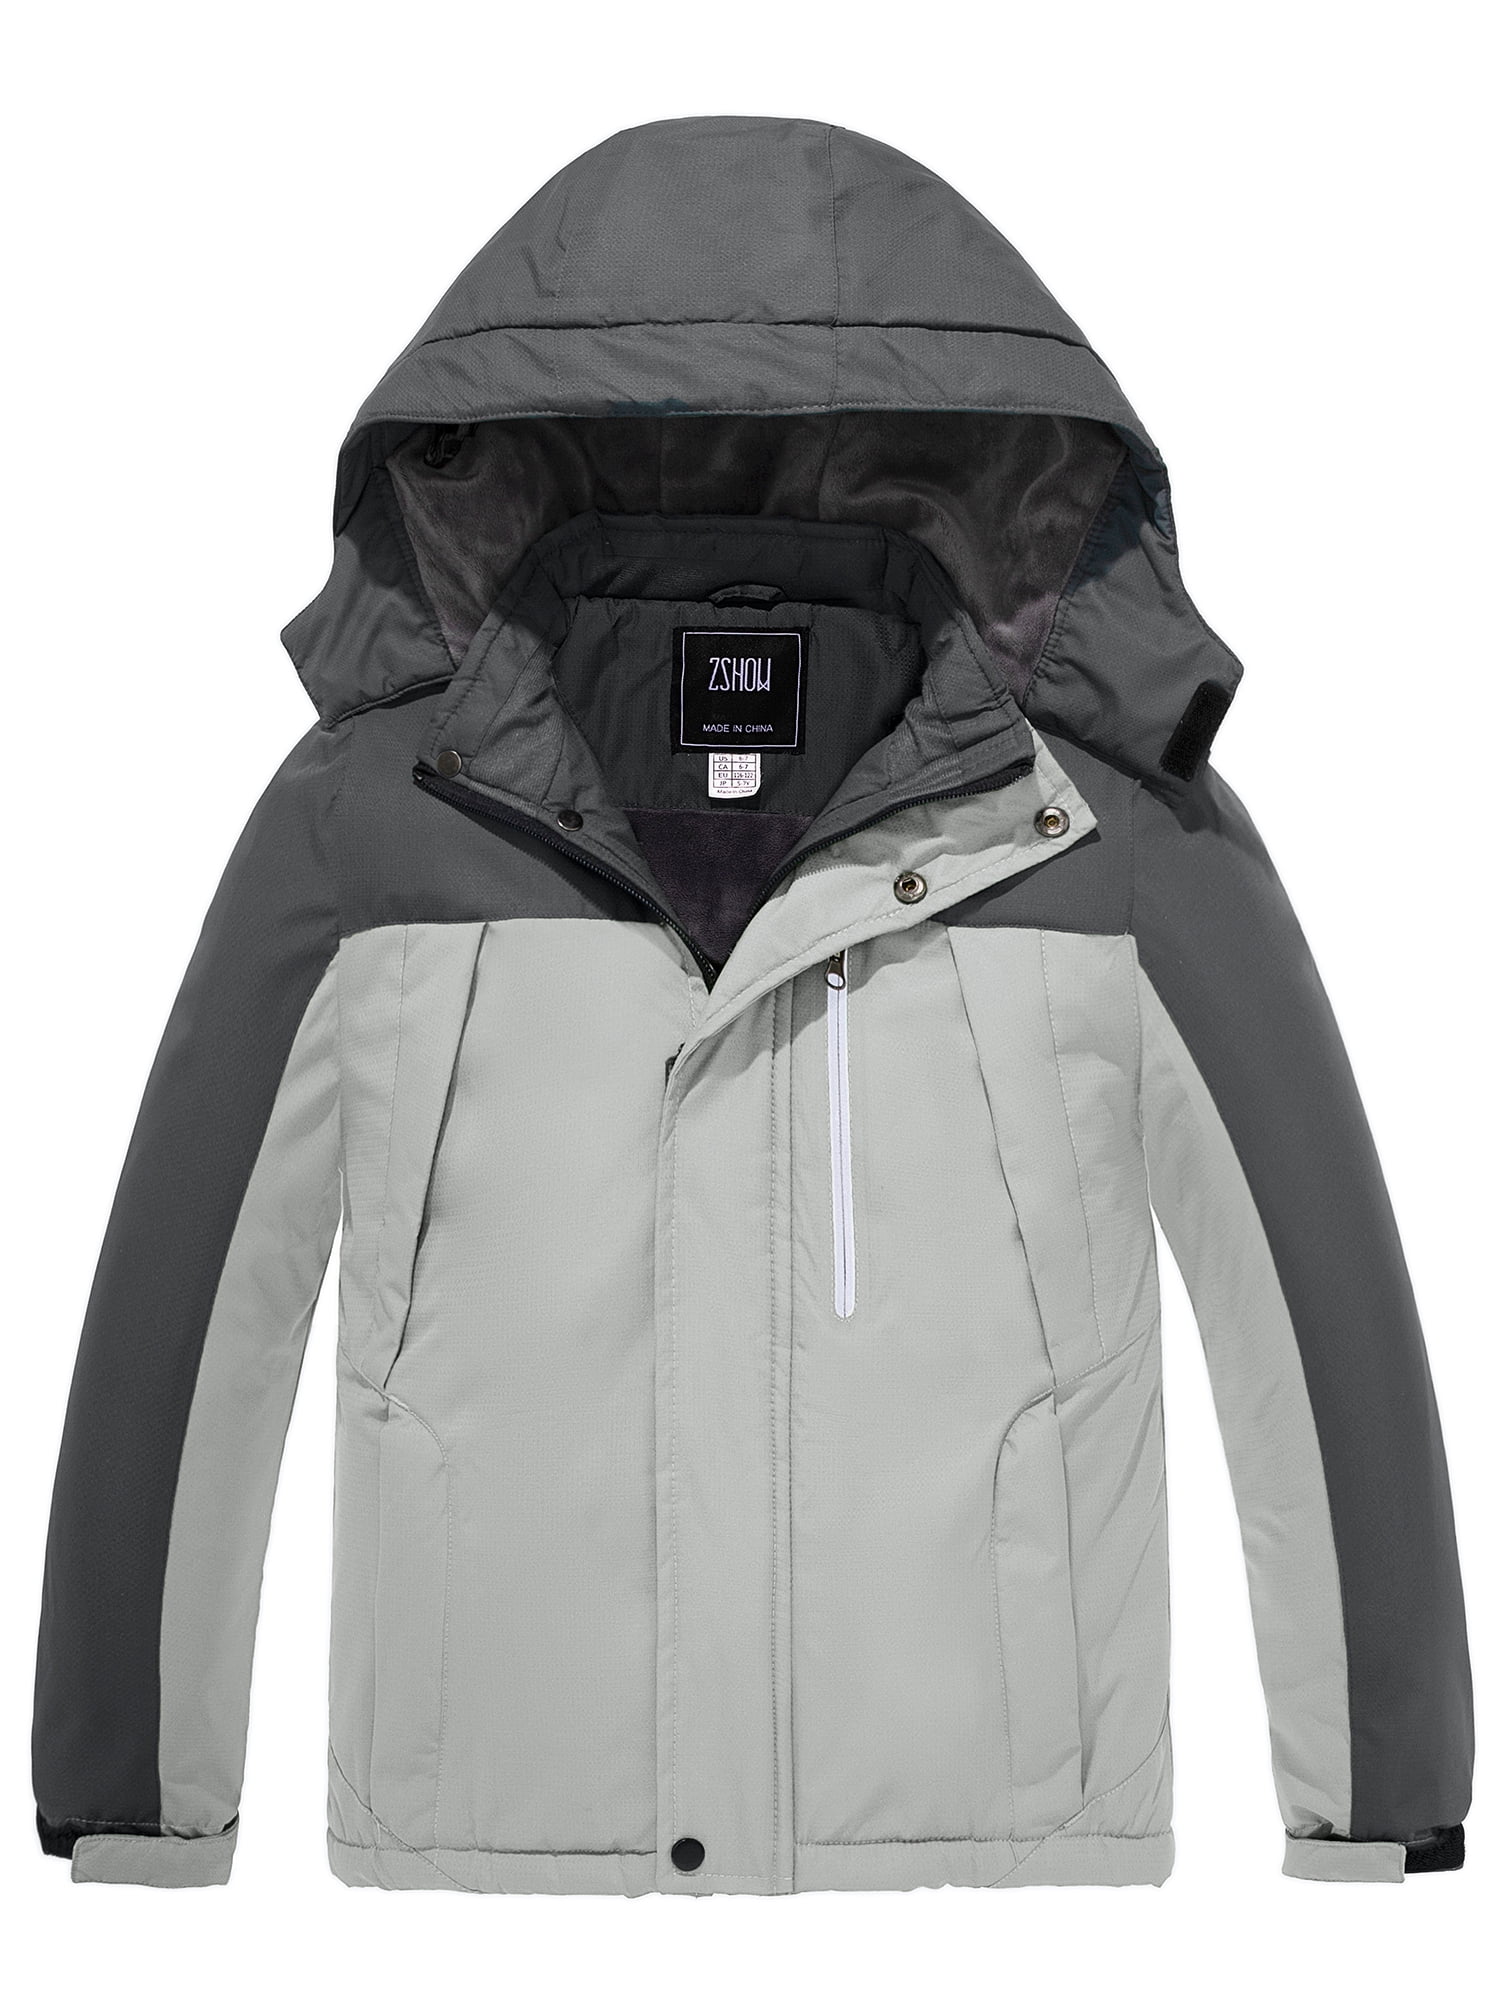 ZSHOW Boy's Snow Jacket Warm Ski Jacket Waterproof Skiing Coat Grey 10/ ...